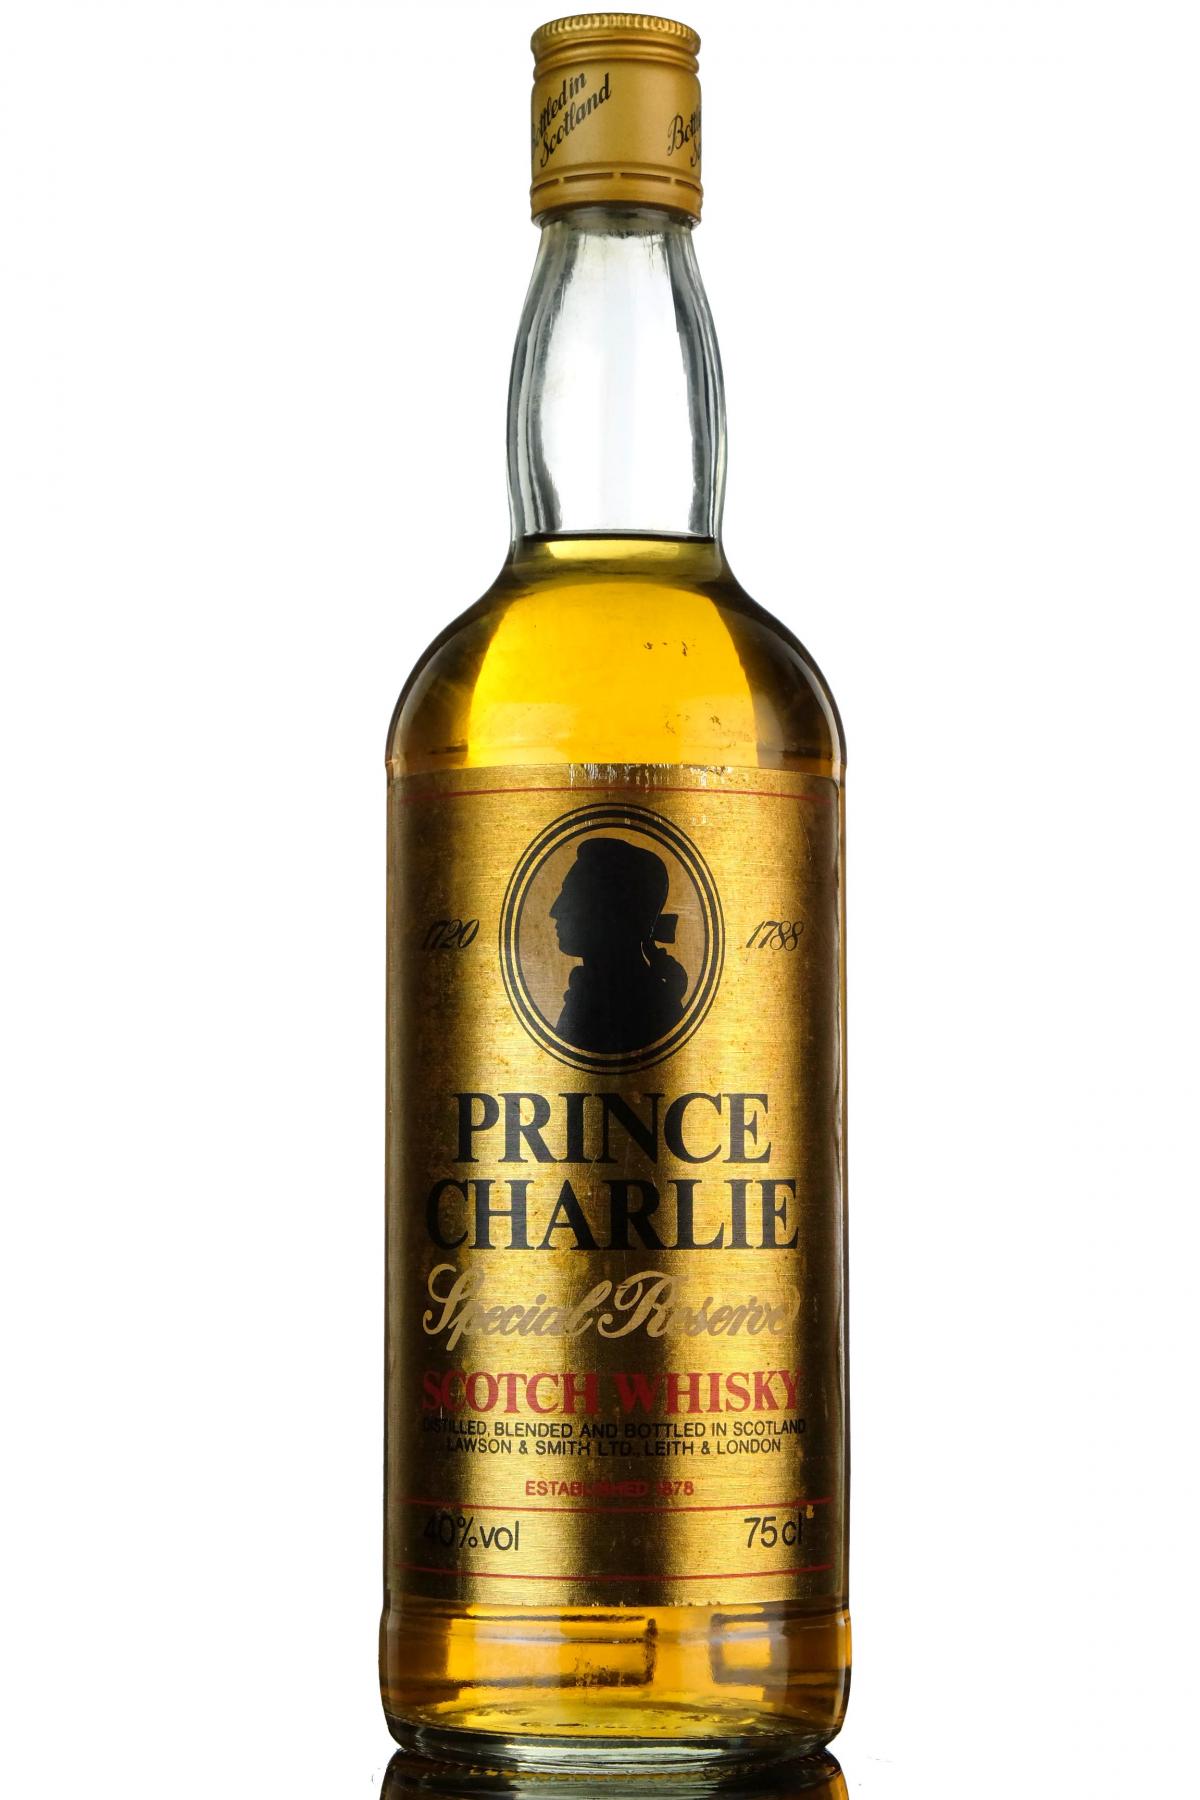 Prince Charlie - 1980s